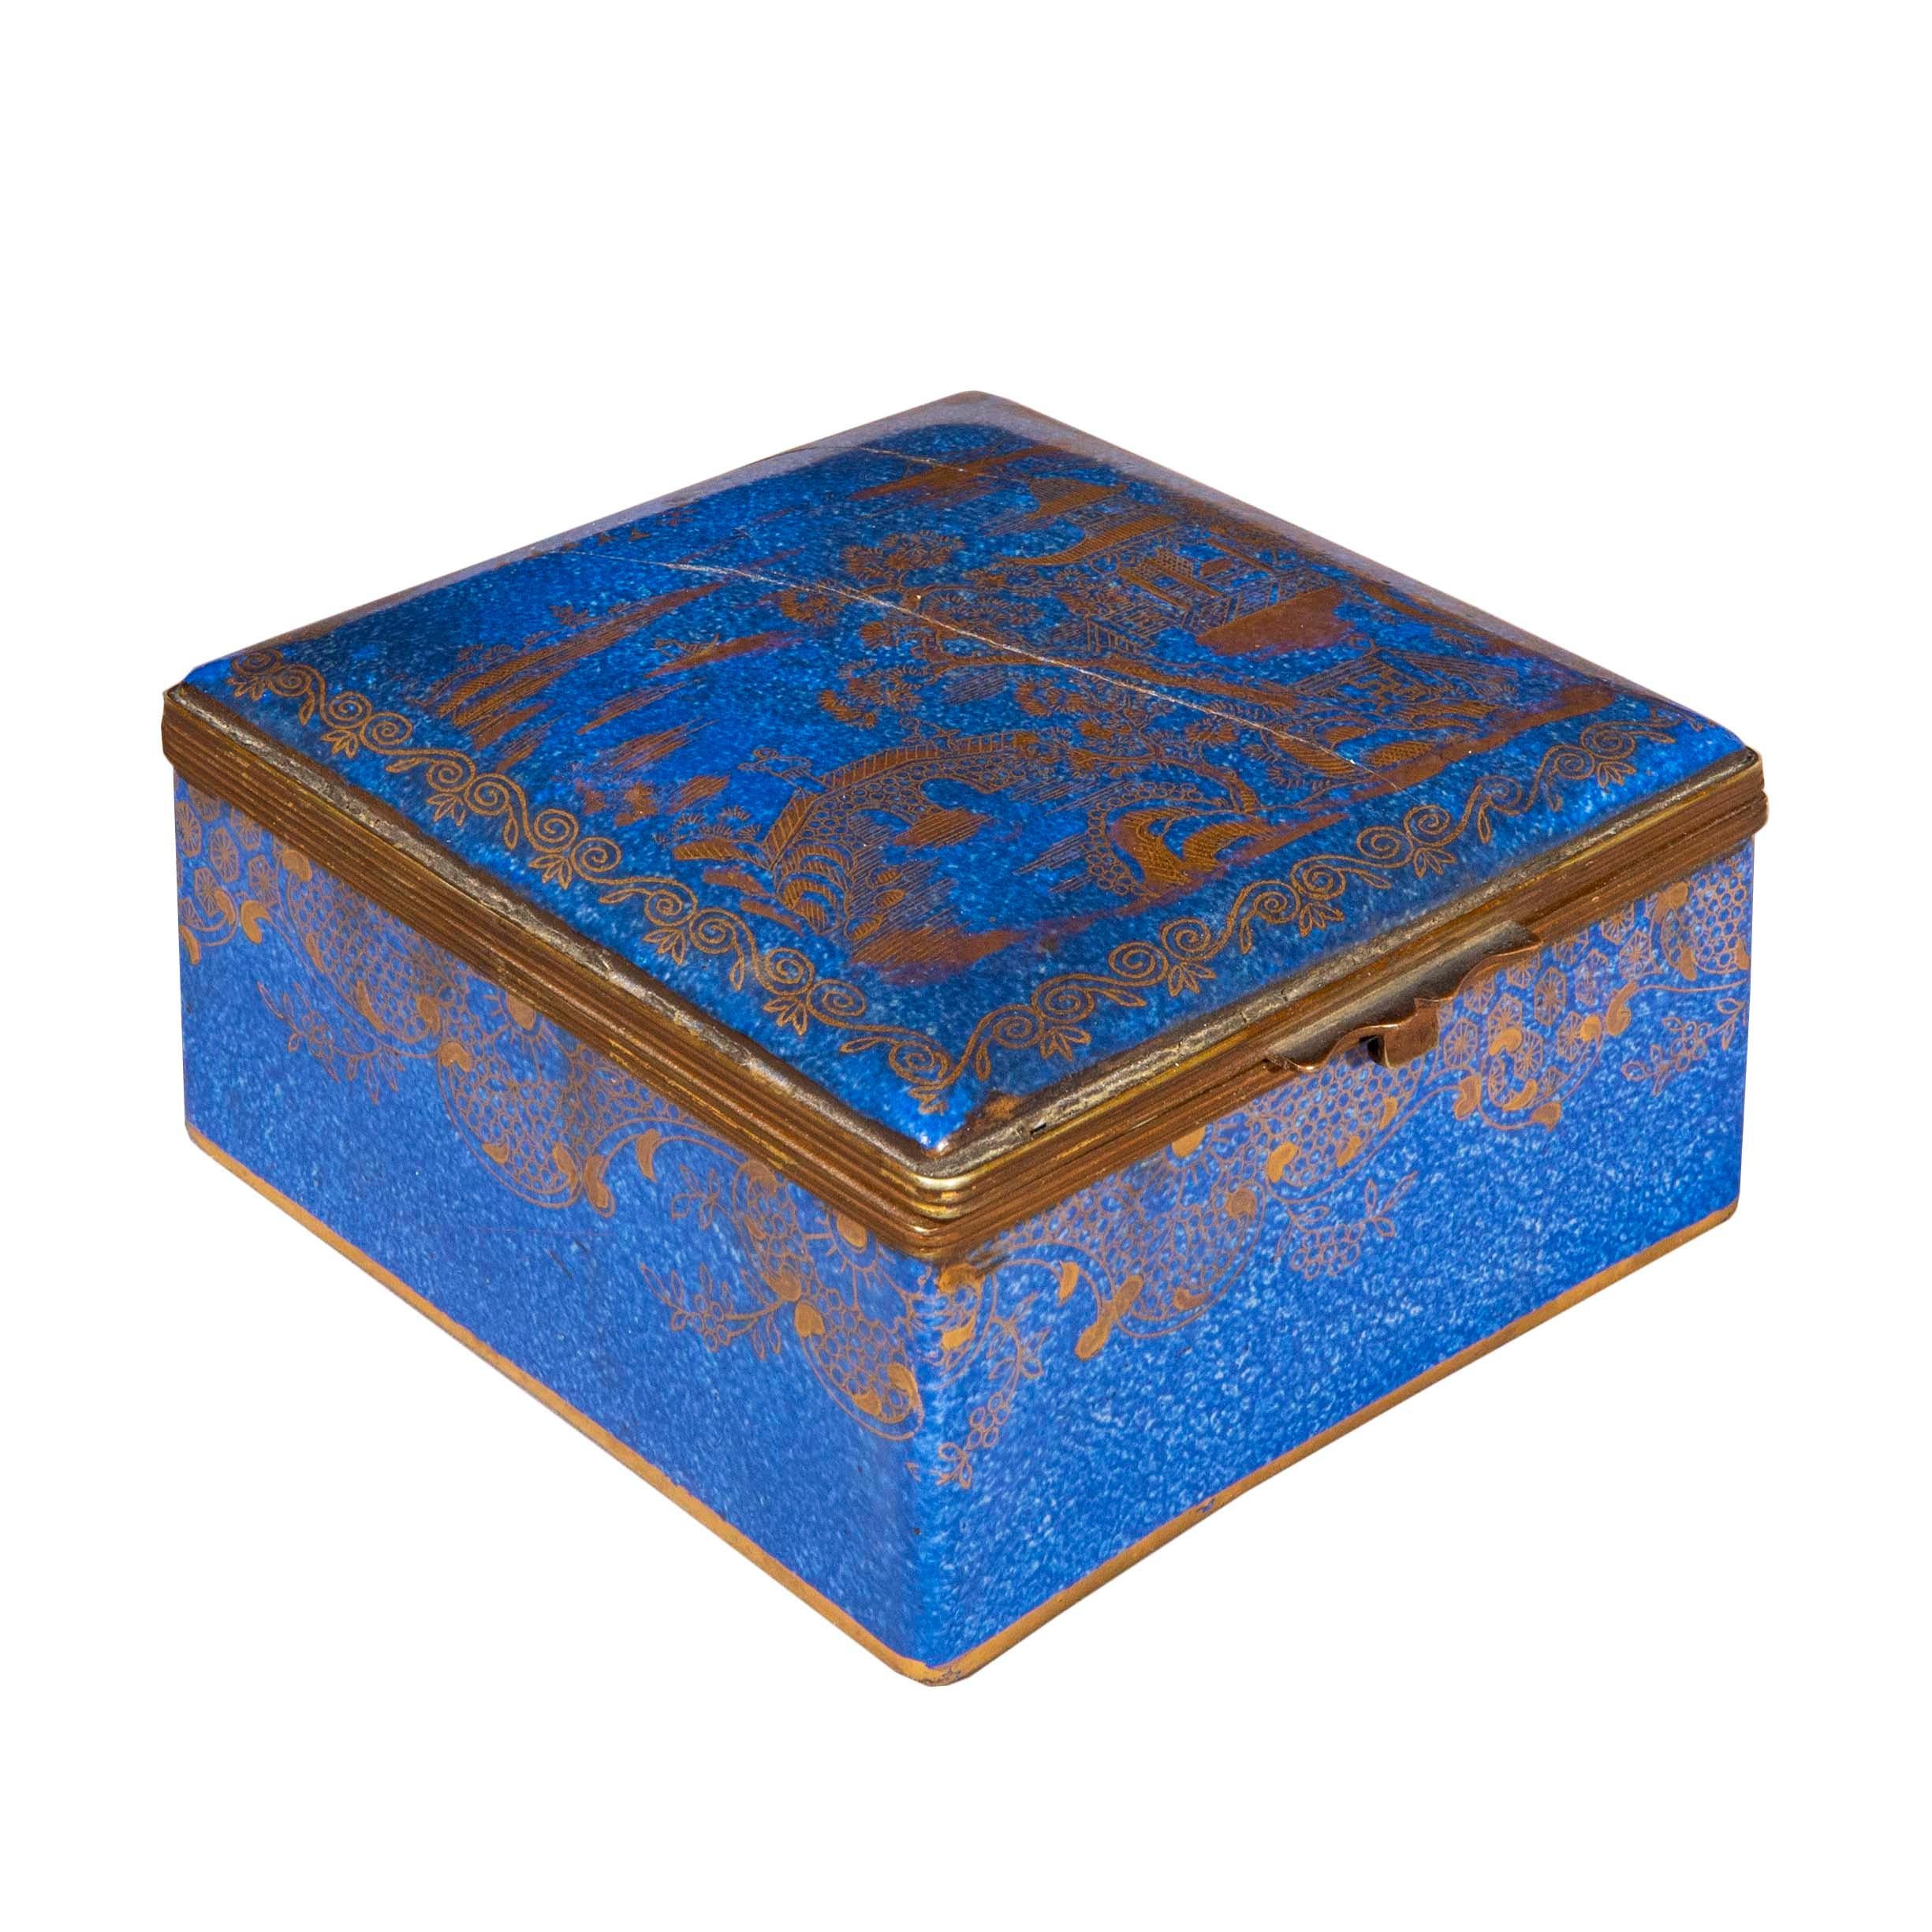 Antique Chinoiserie Blue Staffordshire Porcelain Box For Sale 1